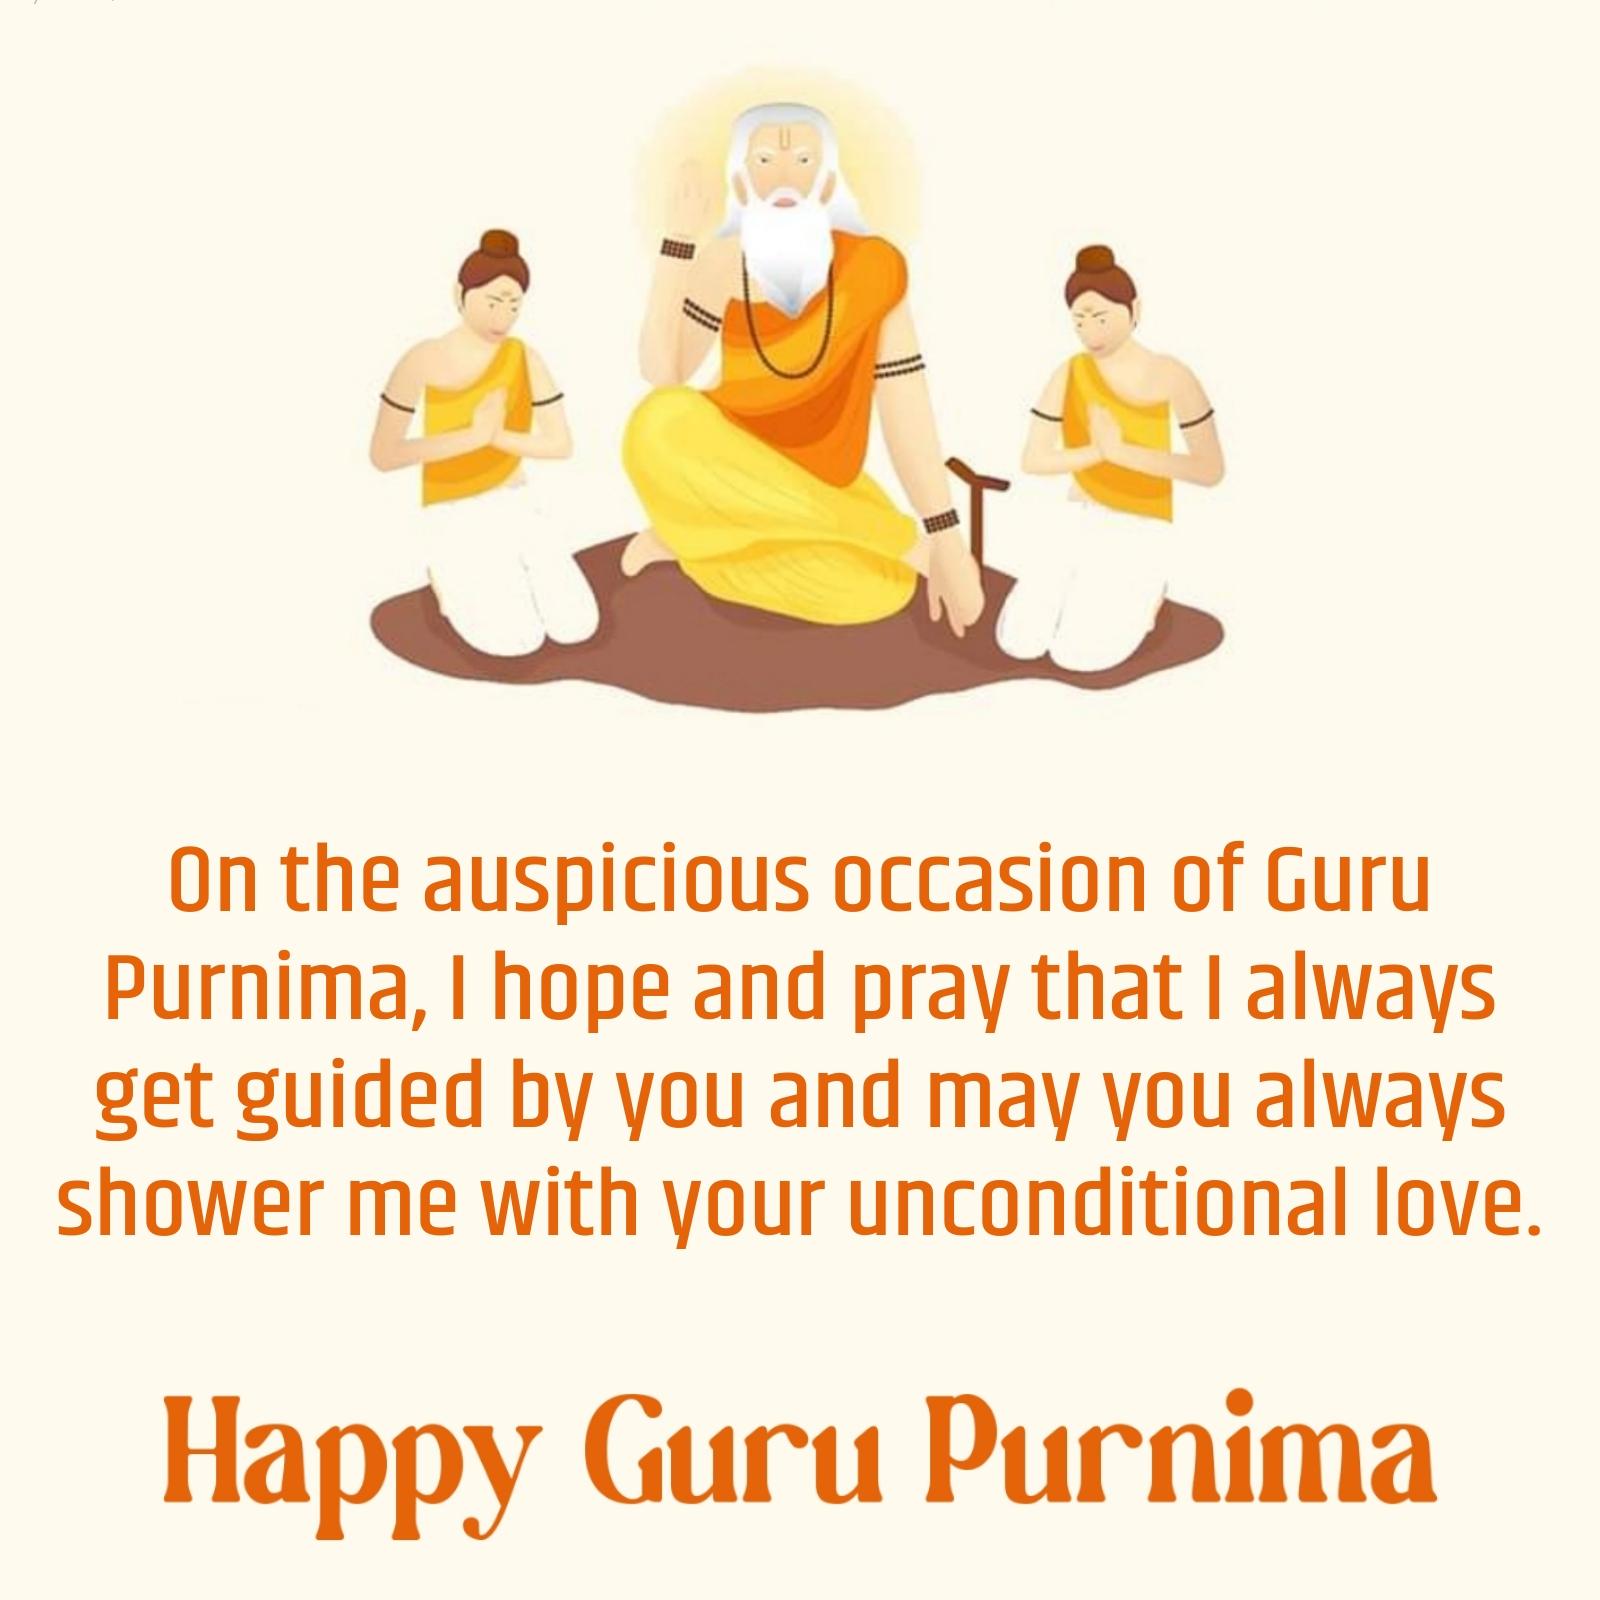 On the auspicious occasion of Guru Purnima I hope and pray